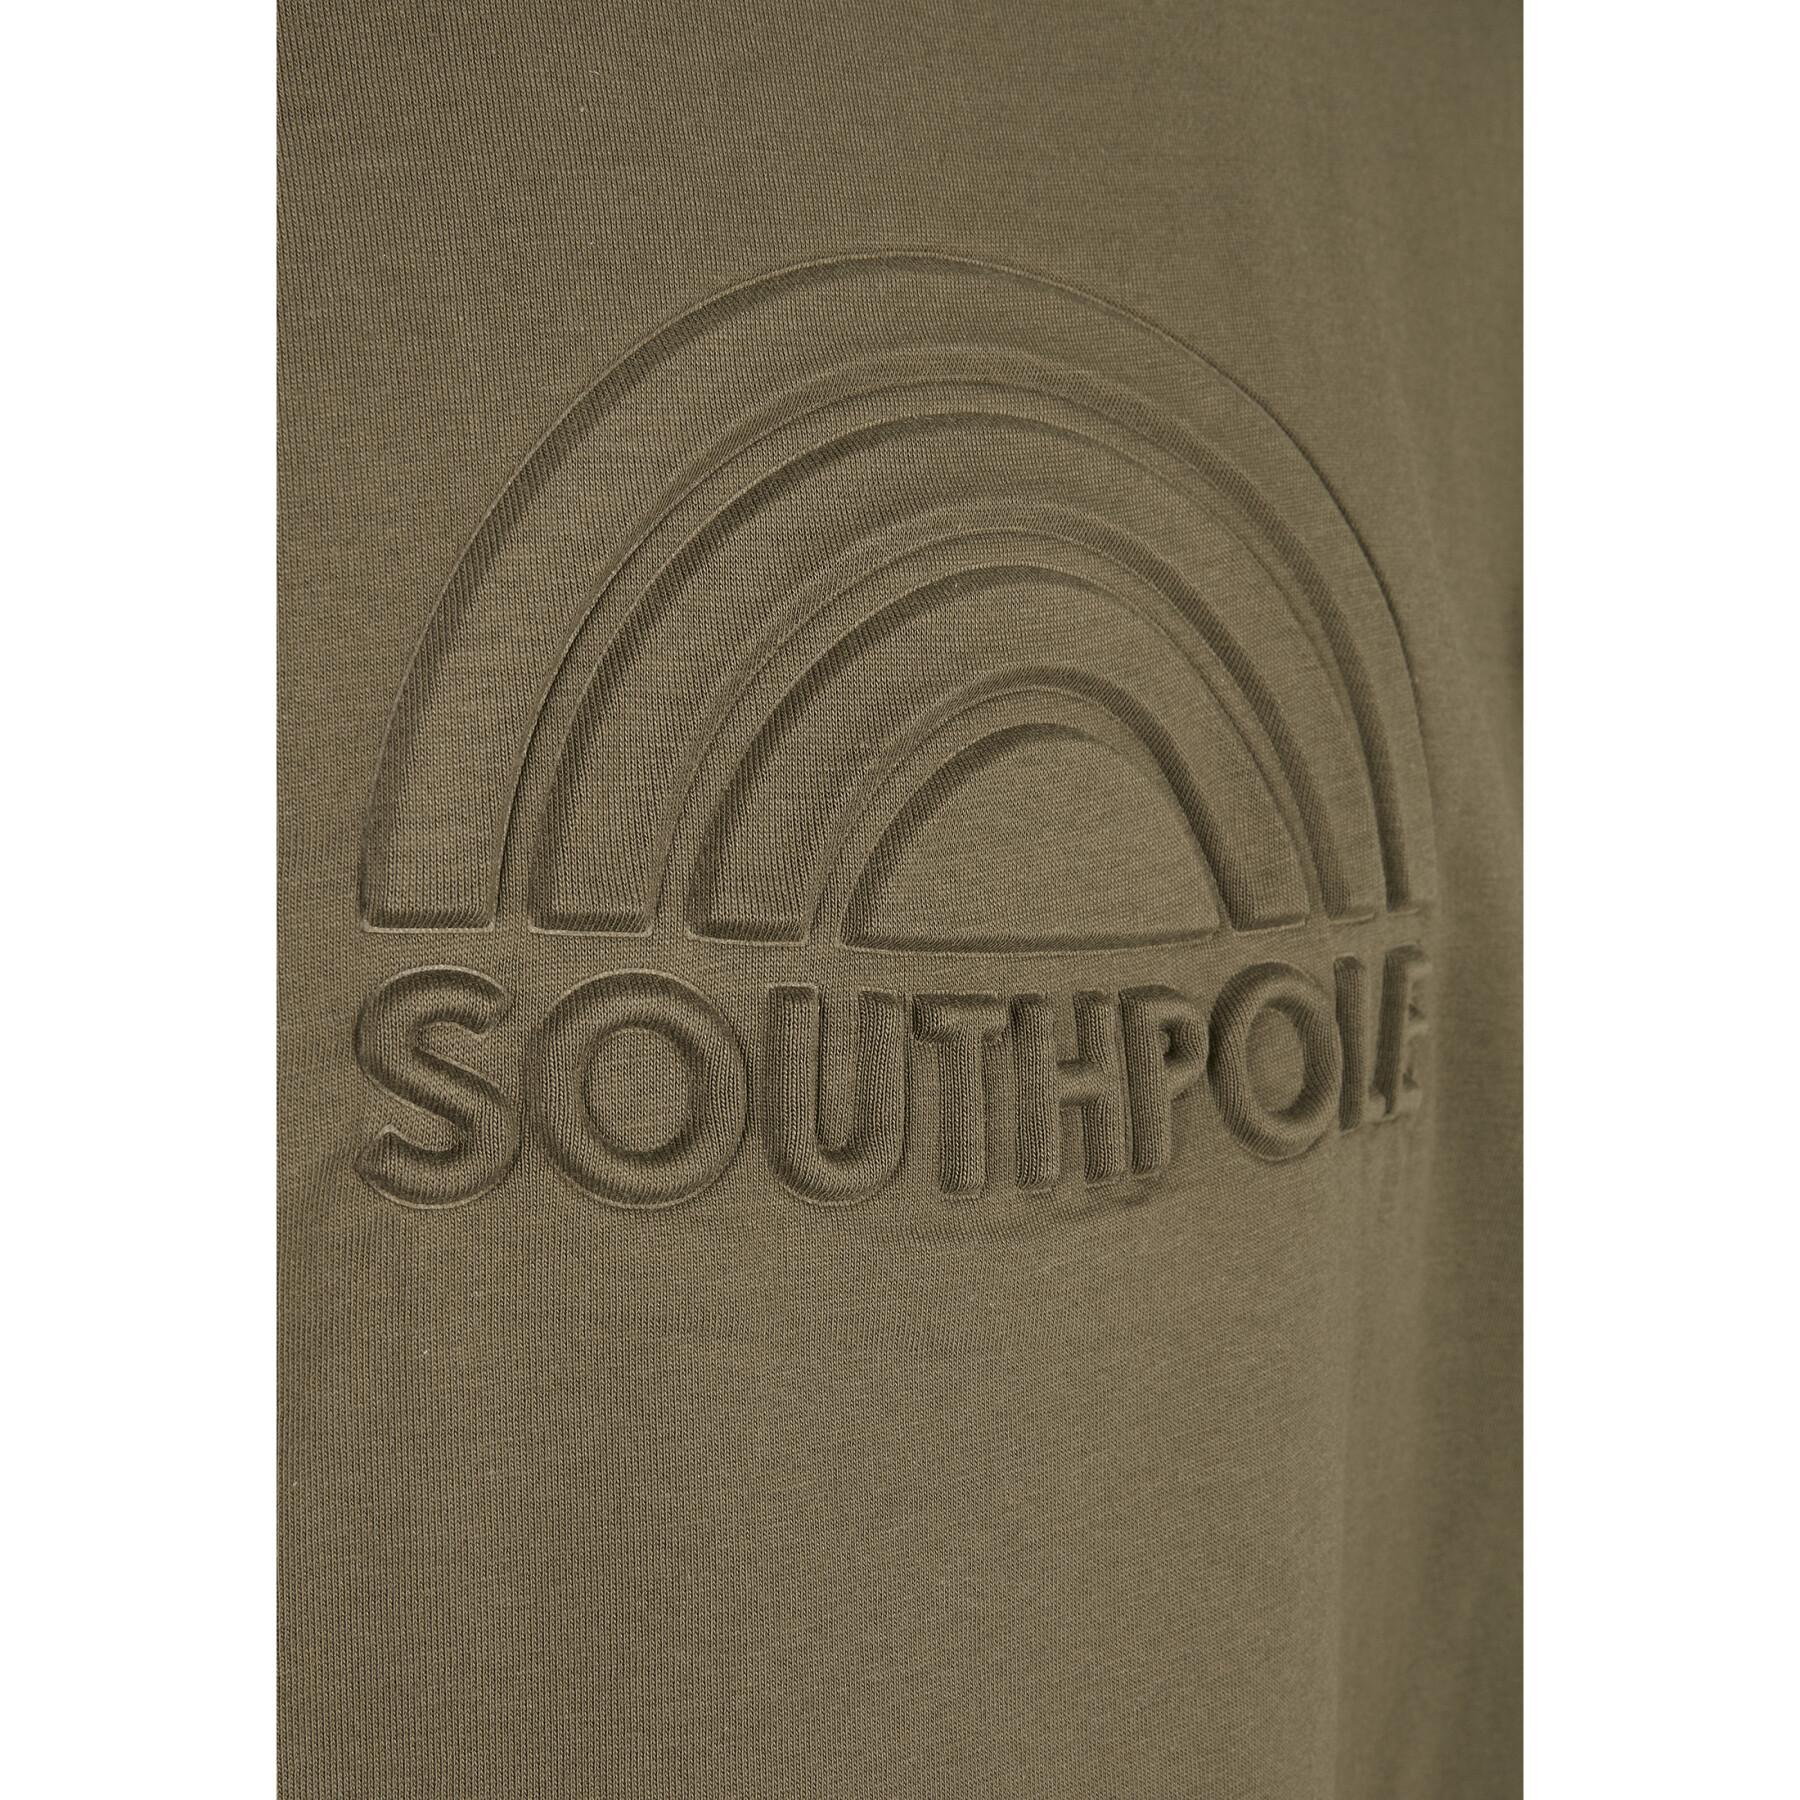 T-Shirt Southpole